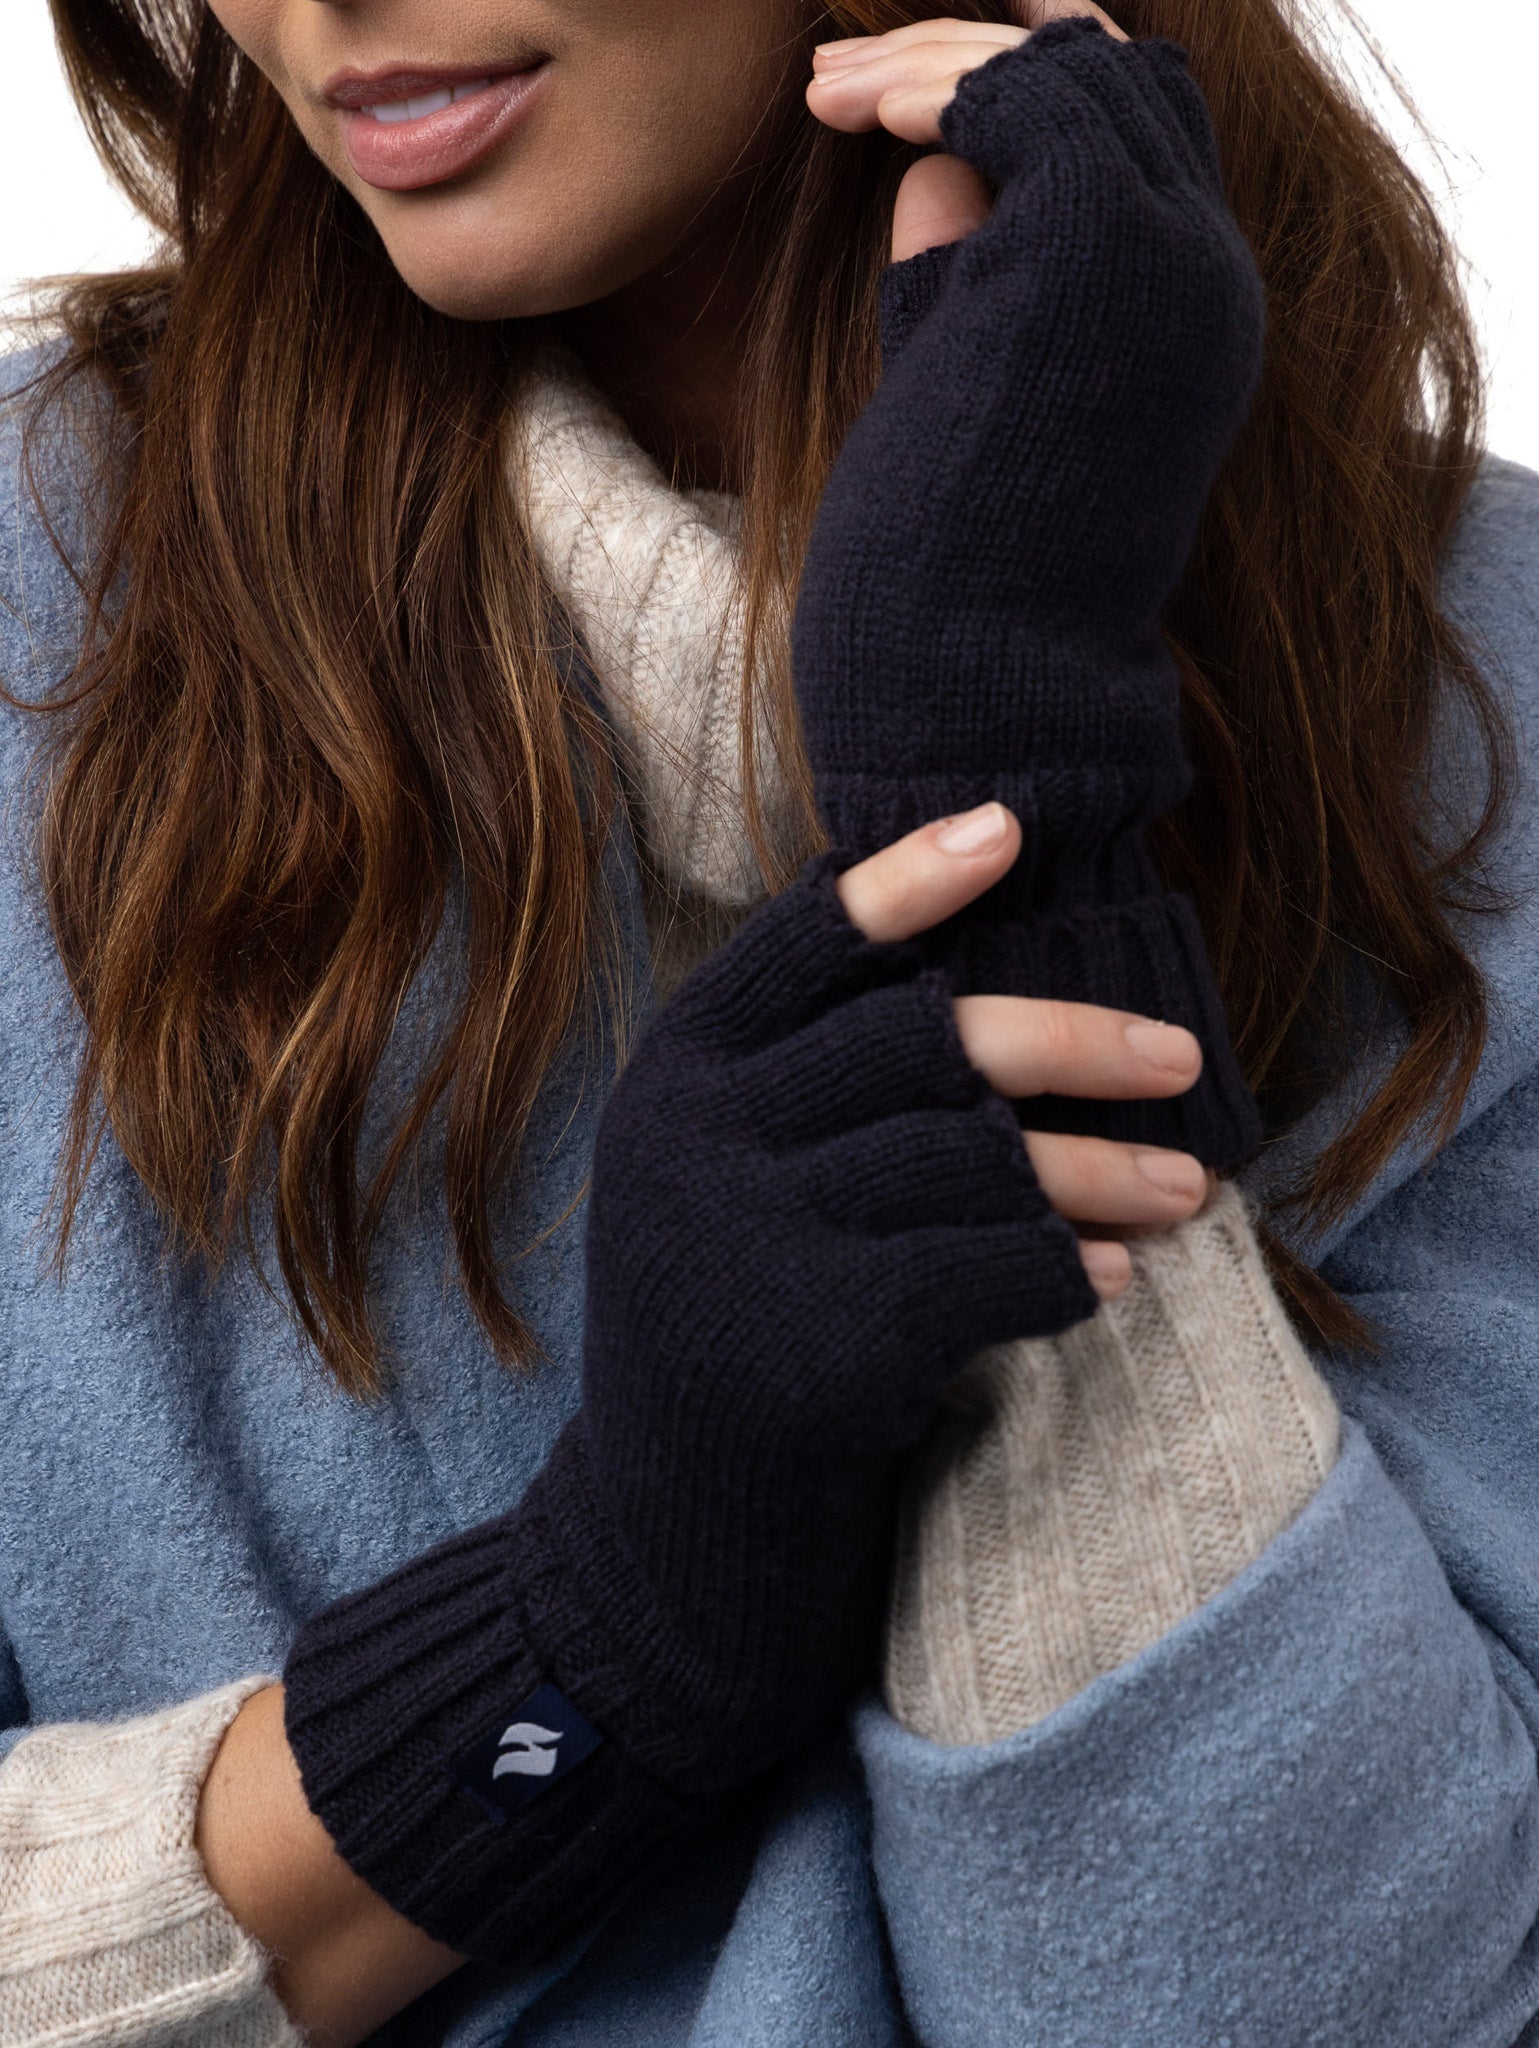 HEAT HOLDERS Fingerless Thermal Gloves-Womens